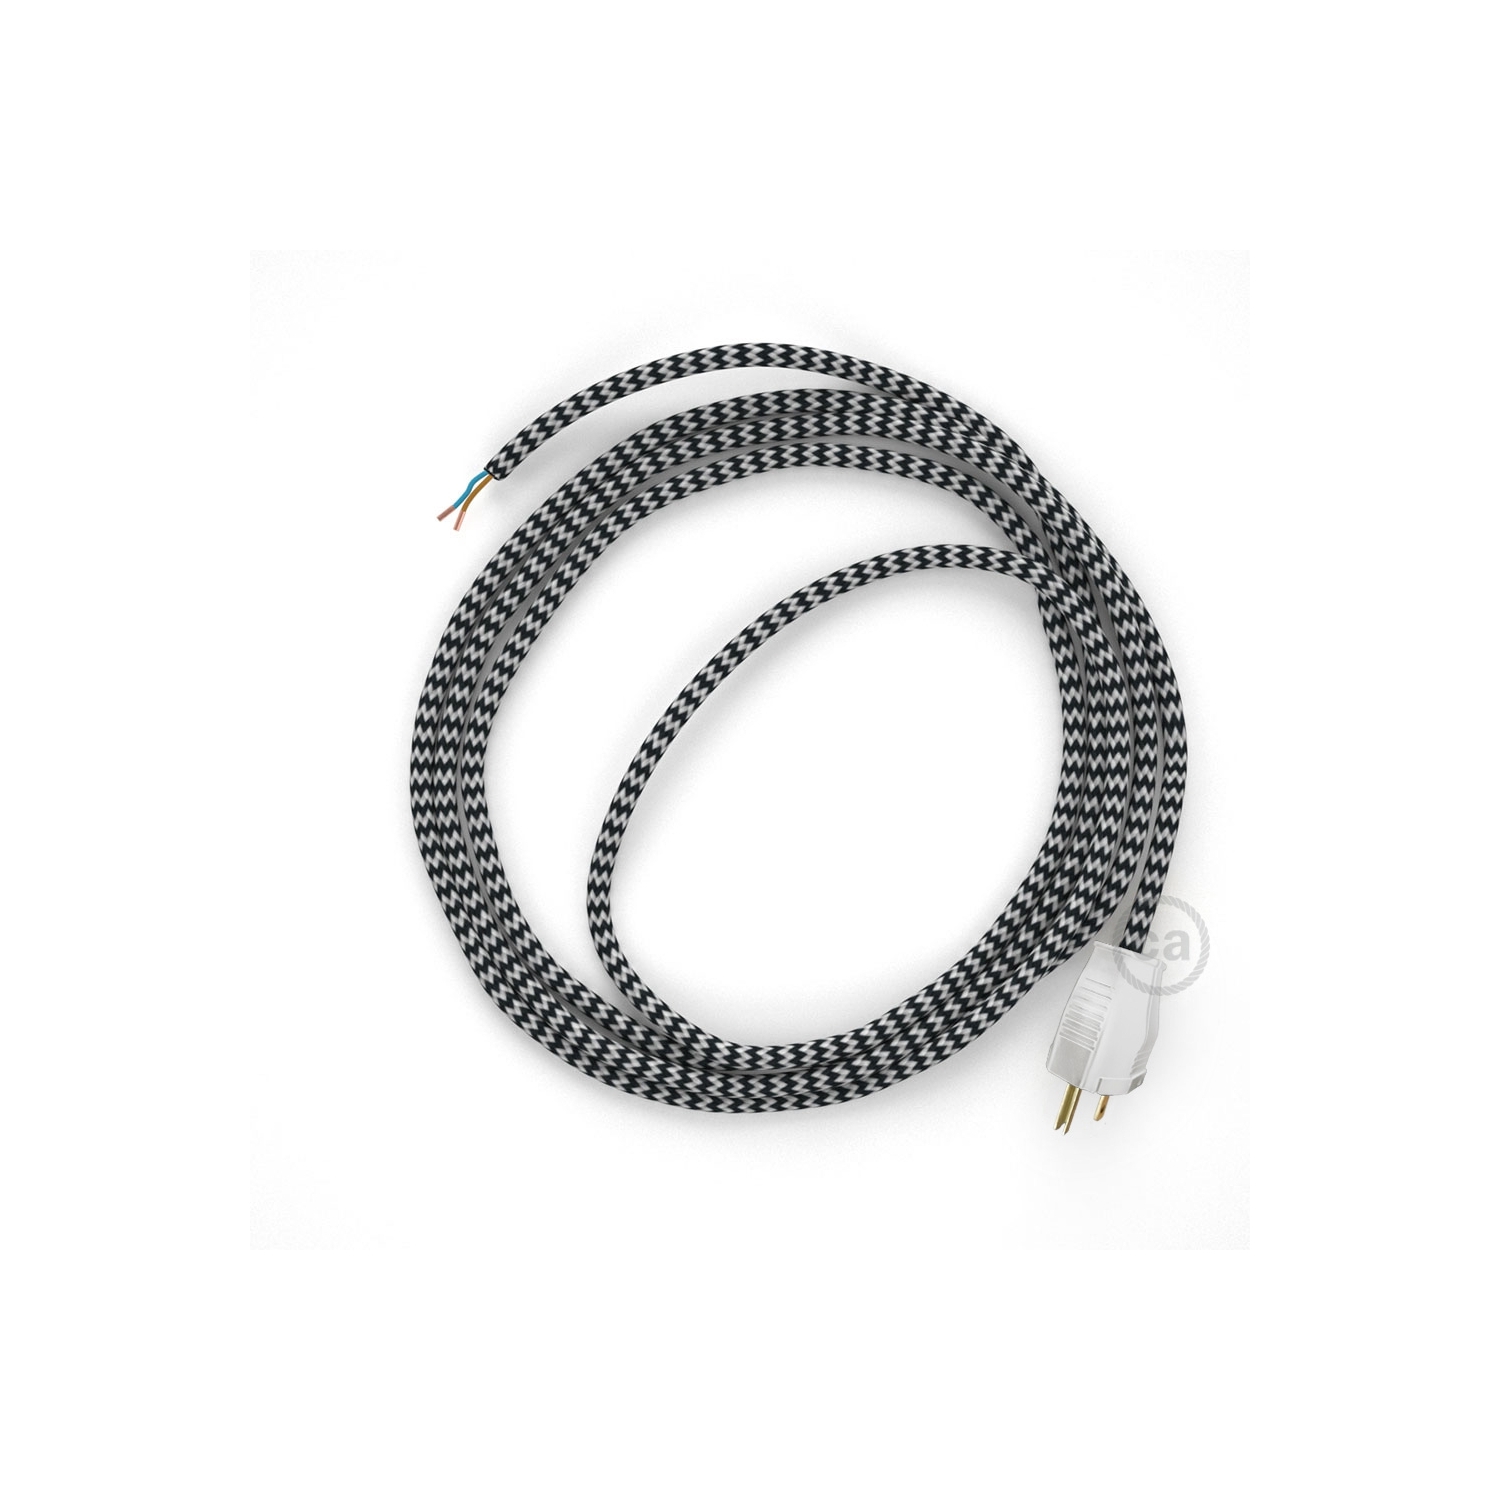 Cord-set - RZ04 Black & White Chevron Covered Round Cable